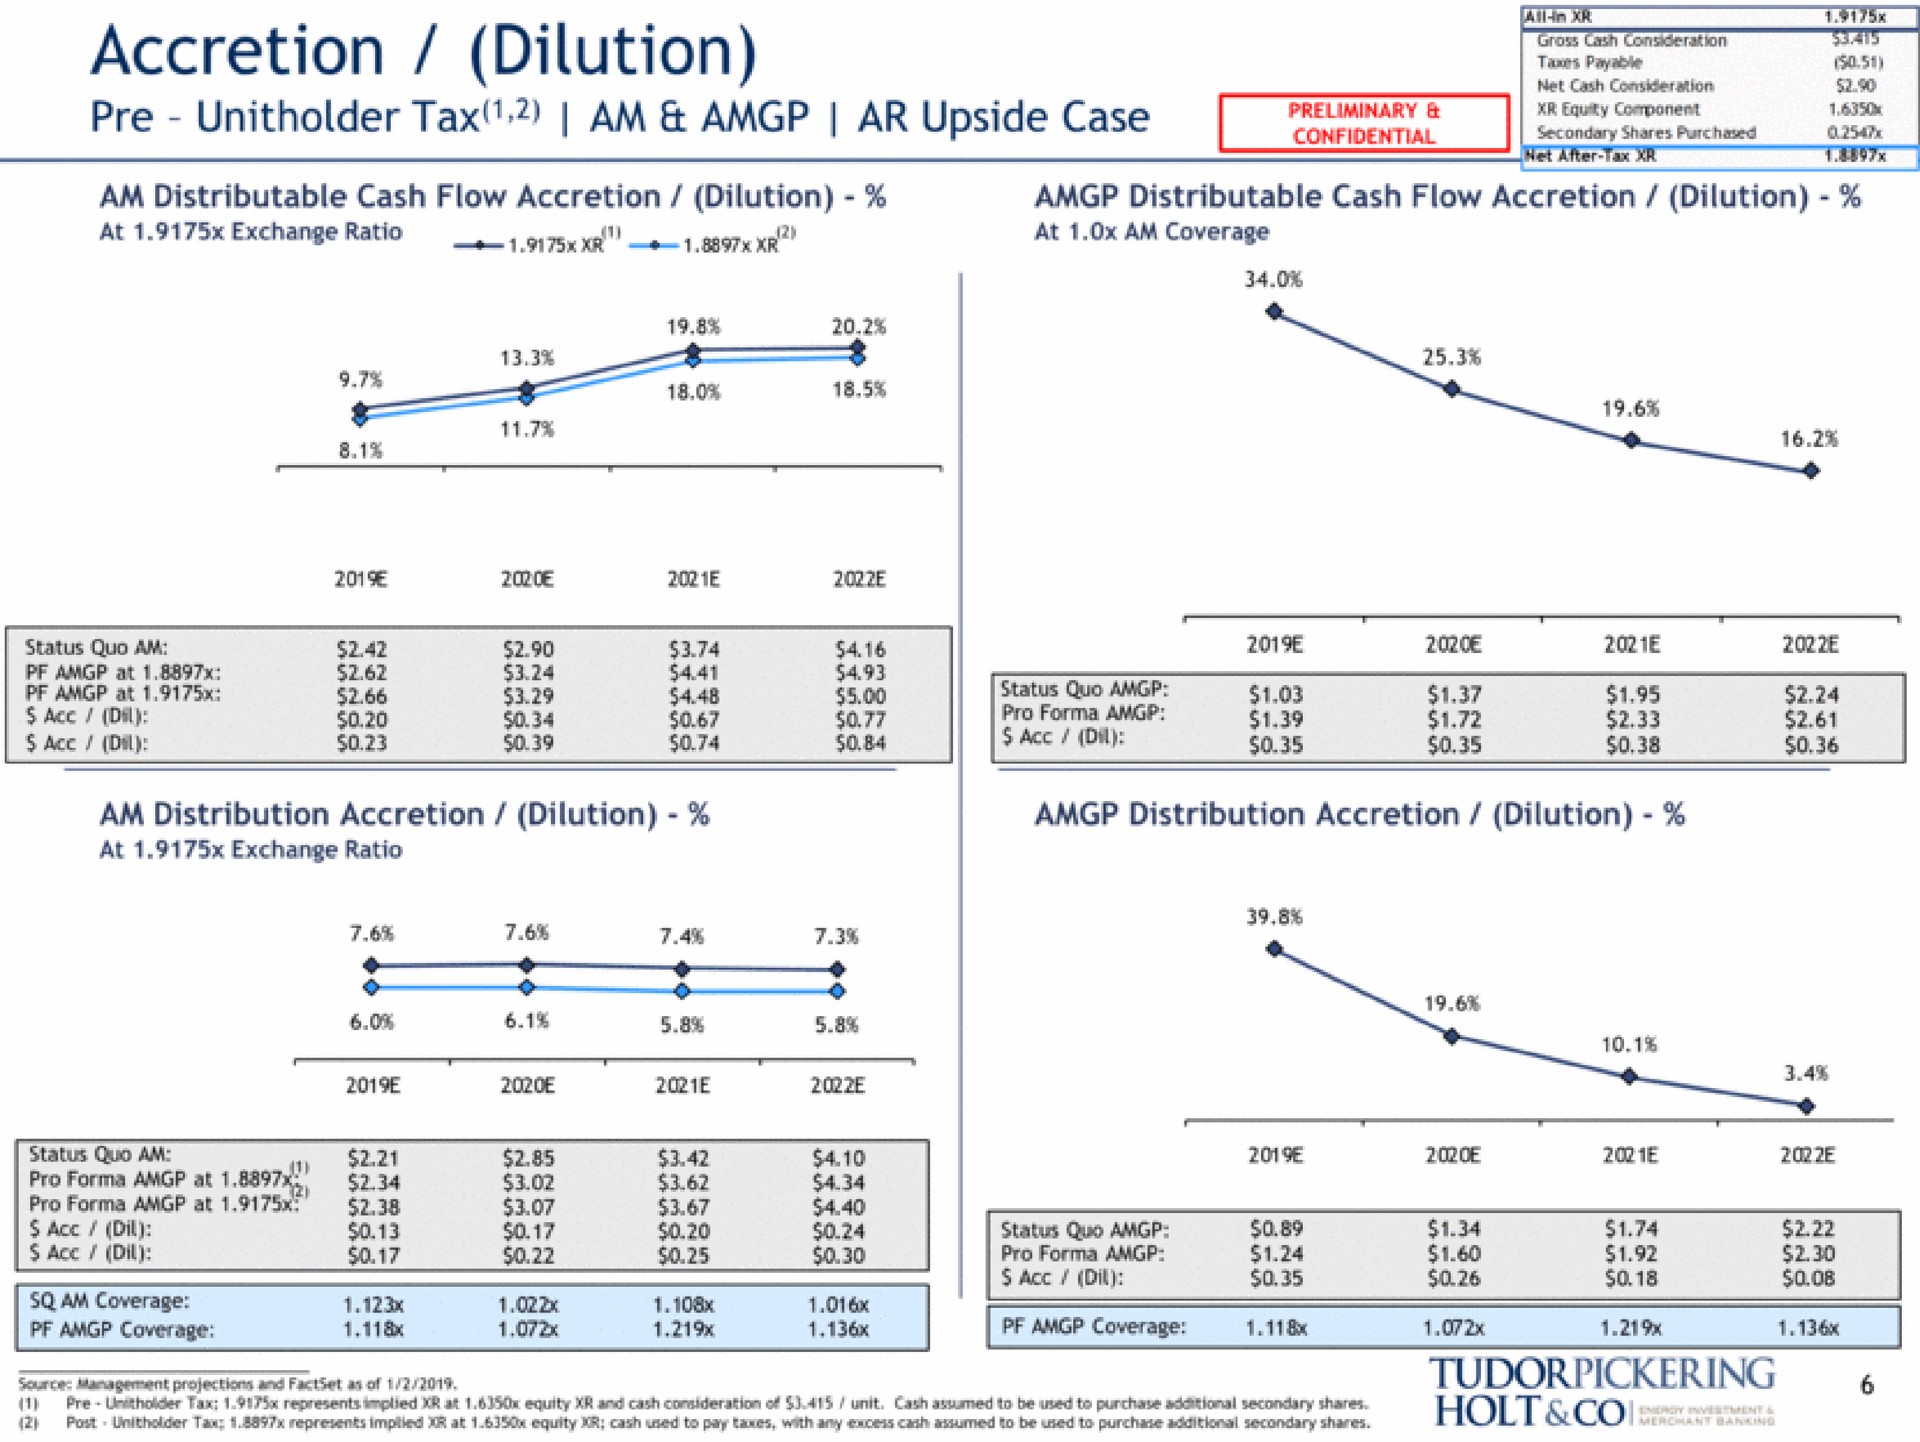 accretion dilution tax am upside case component | Tudor, Pickering, Holt & Co